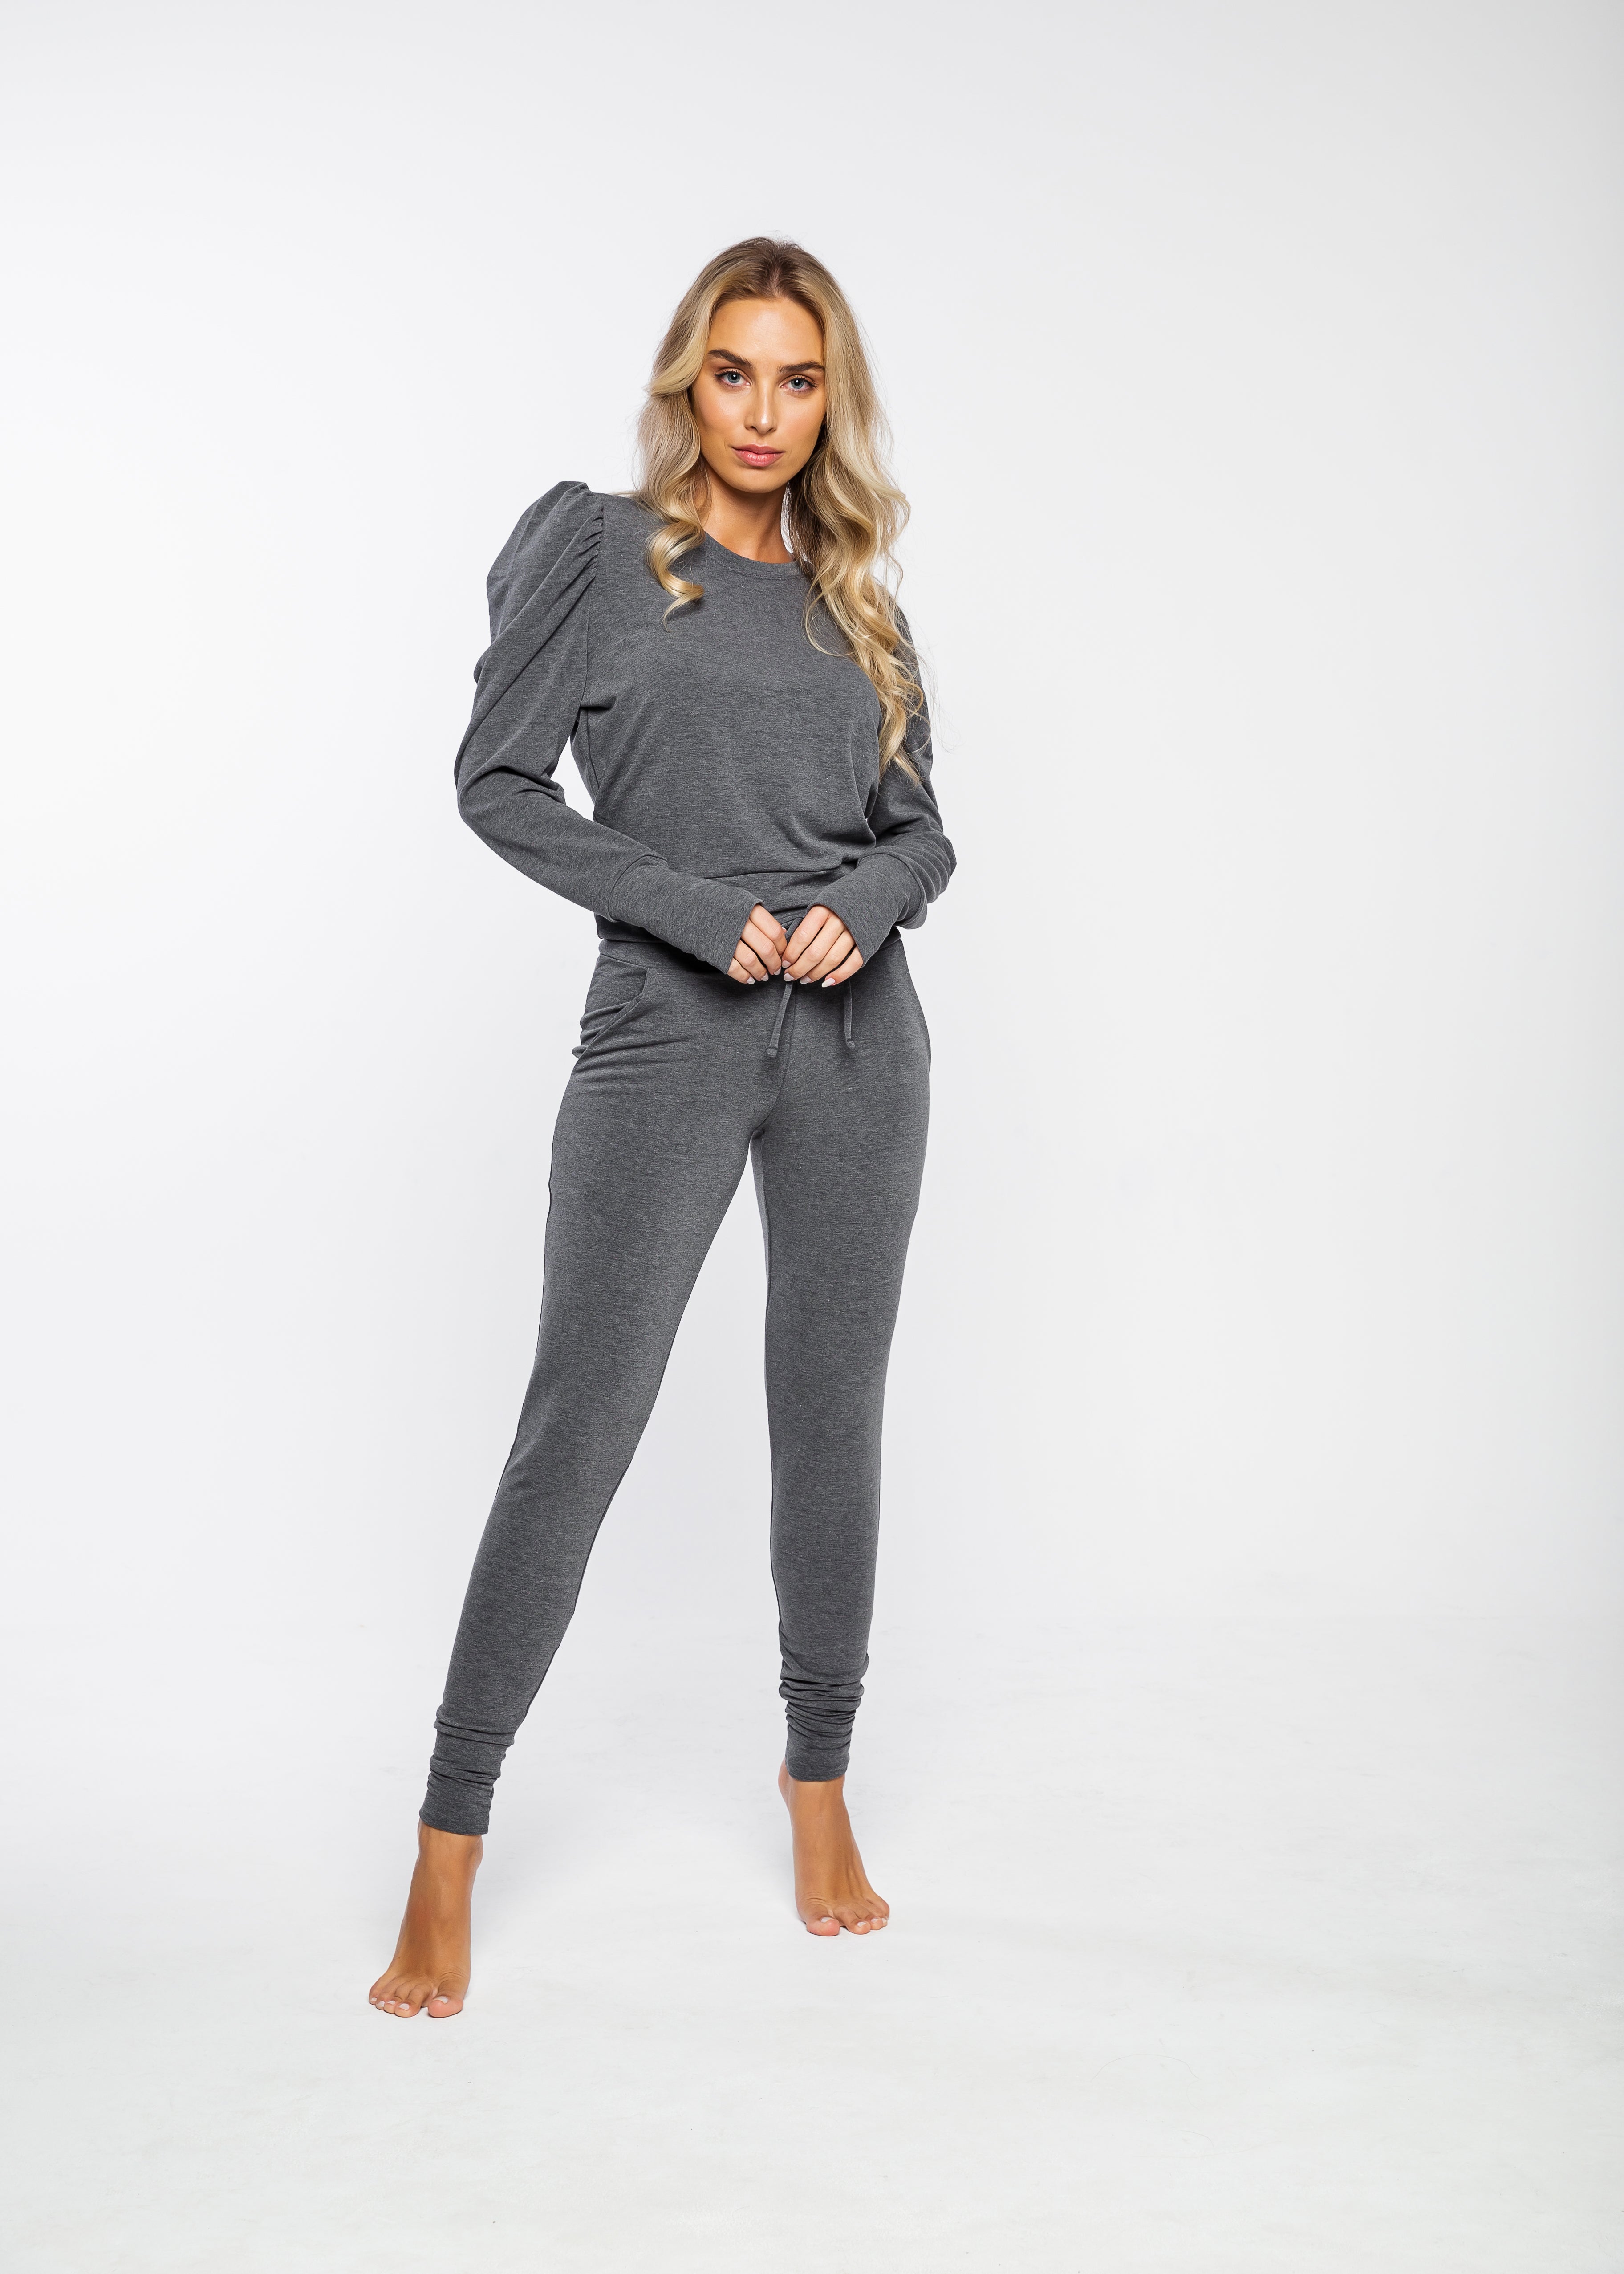  grey sweatpants, female model